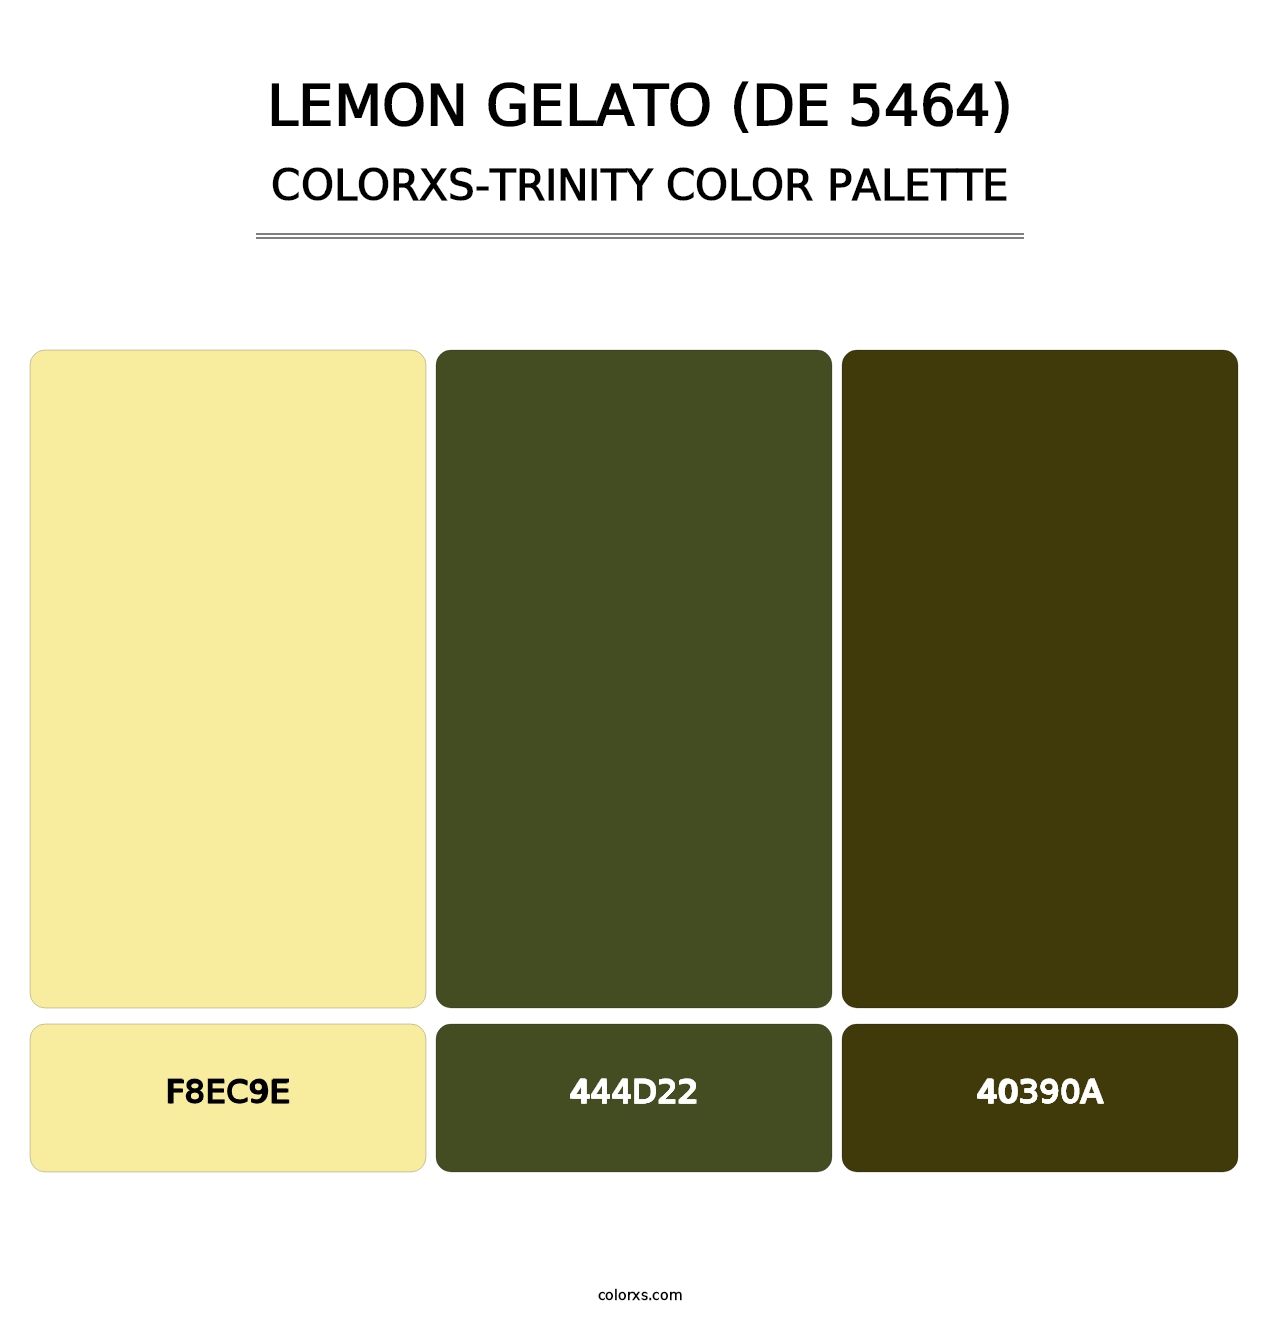 Lemon Gelato (DE 5464) - Colorxs Trinity Palette